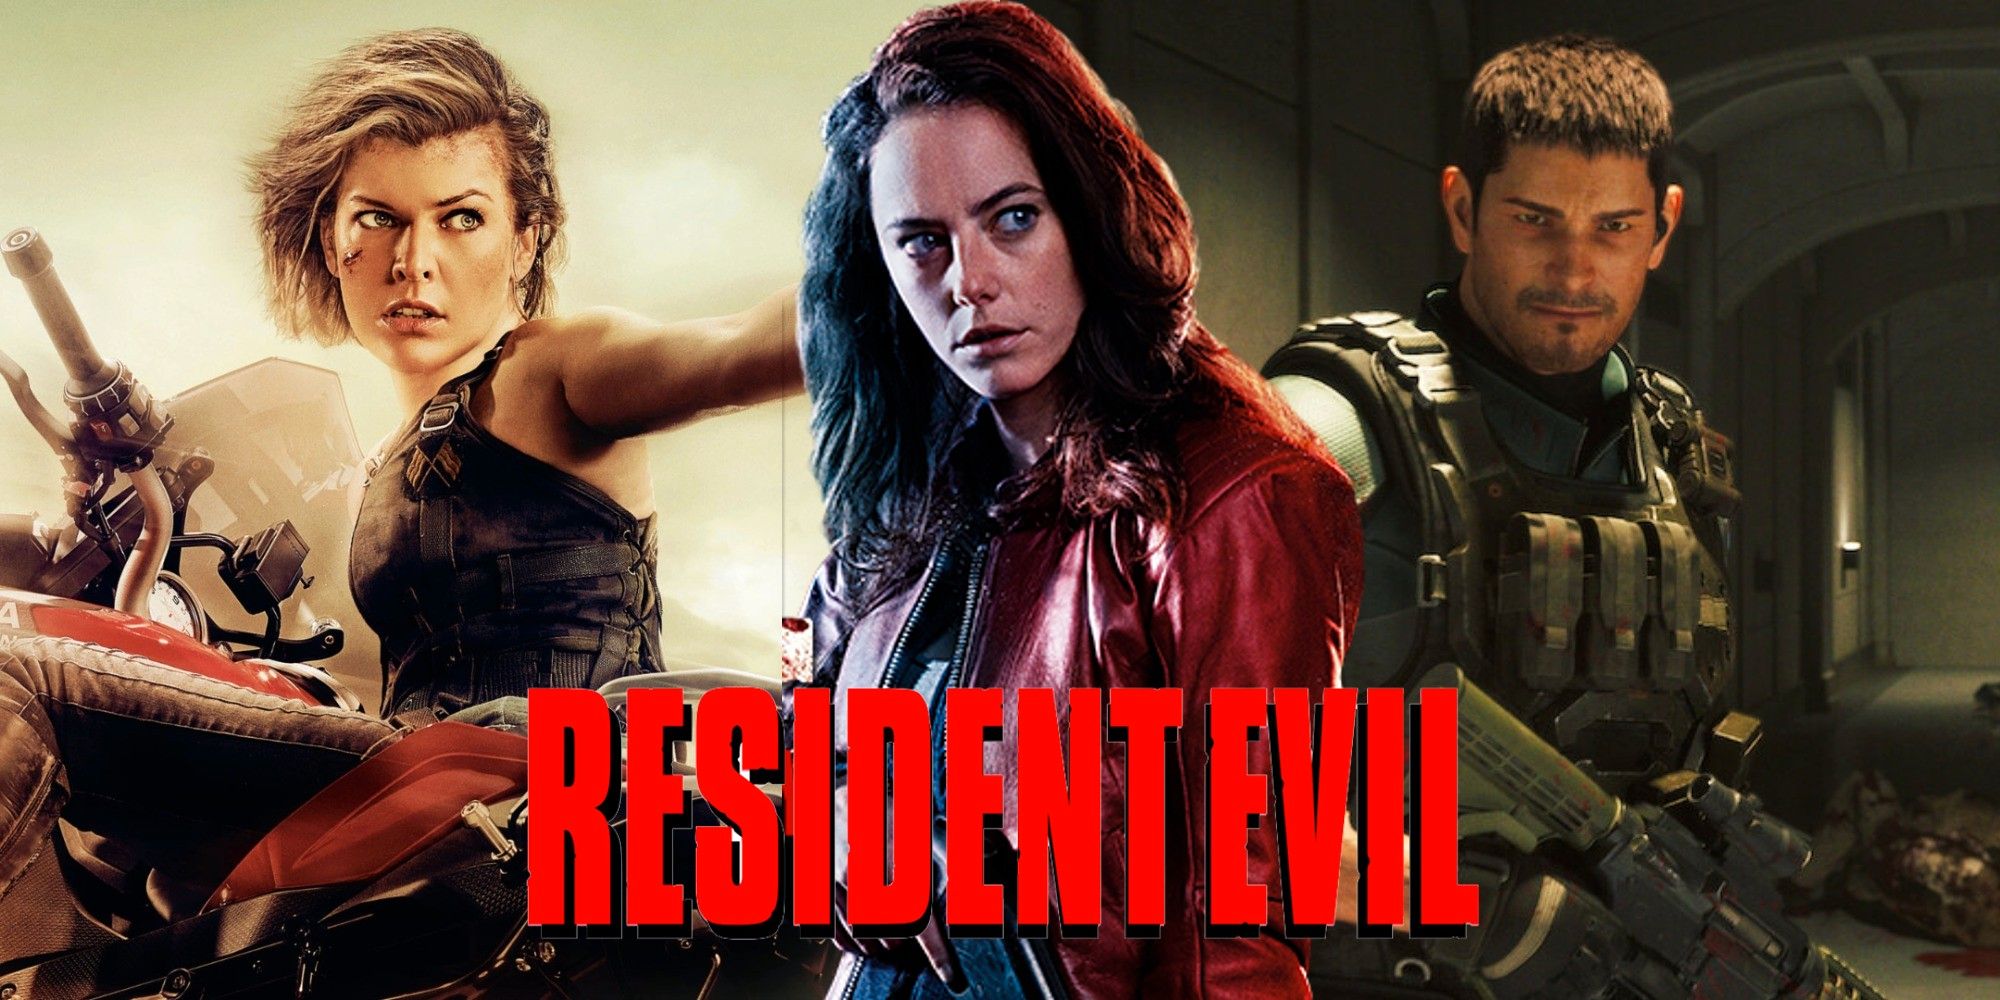 Las 10 mejores películas de Resident Evil (según Rotten Tomatoes)